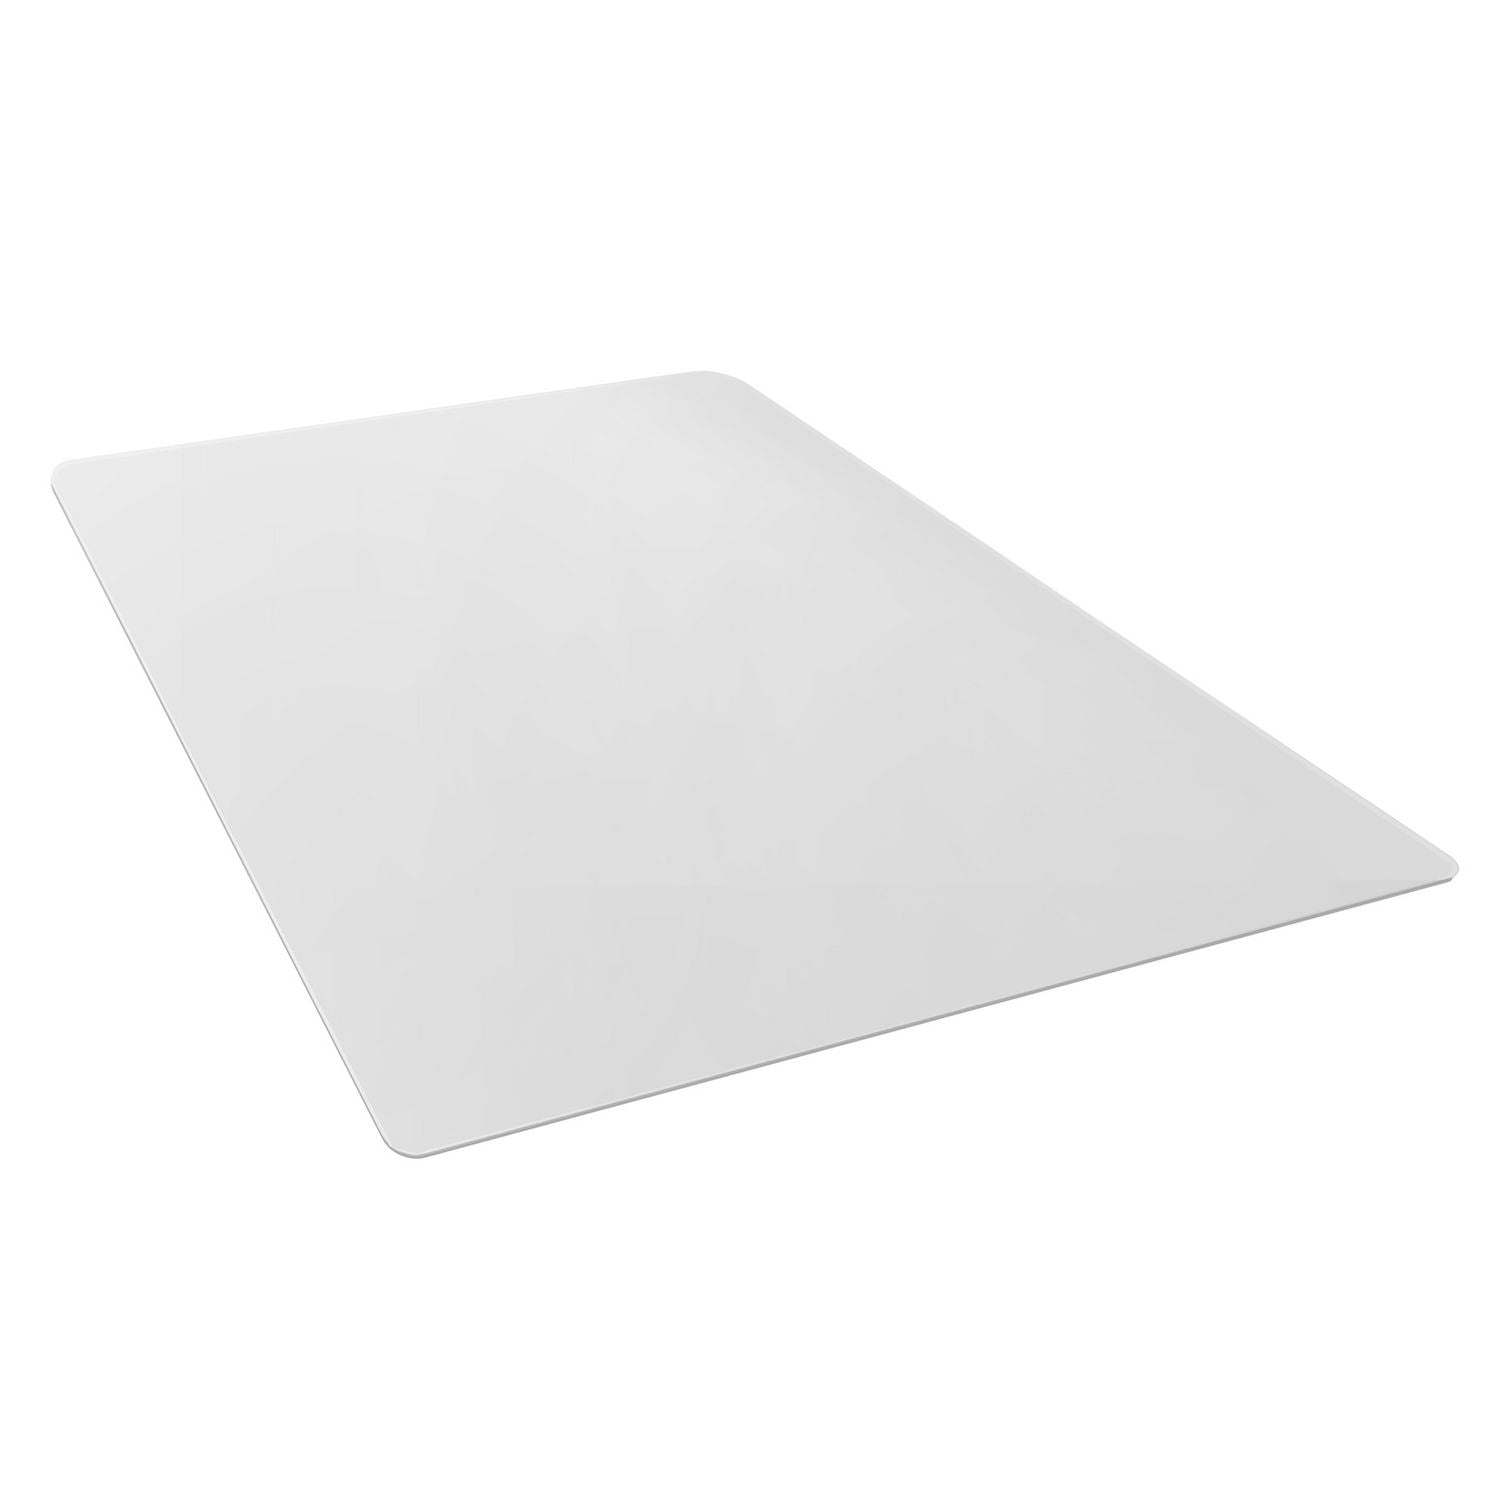 ecotex-marlon-bioplus-rectangular-polycarbonate-chair-mat-for-hard-floors-rectangular-35-x-47-clear_flrnccmflbs0002 - 1